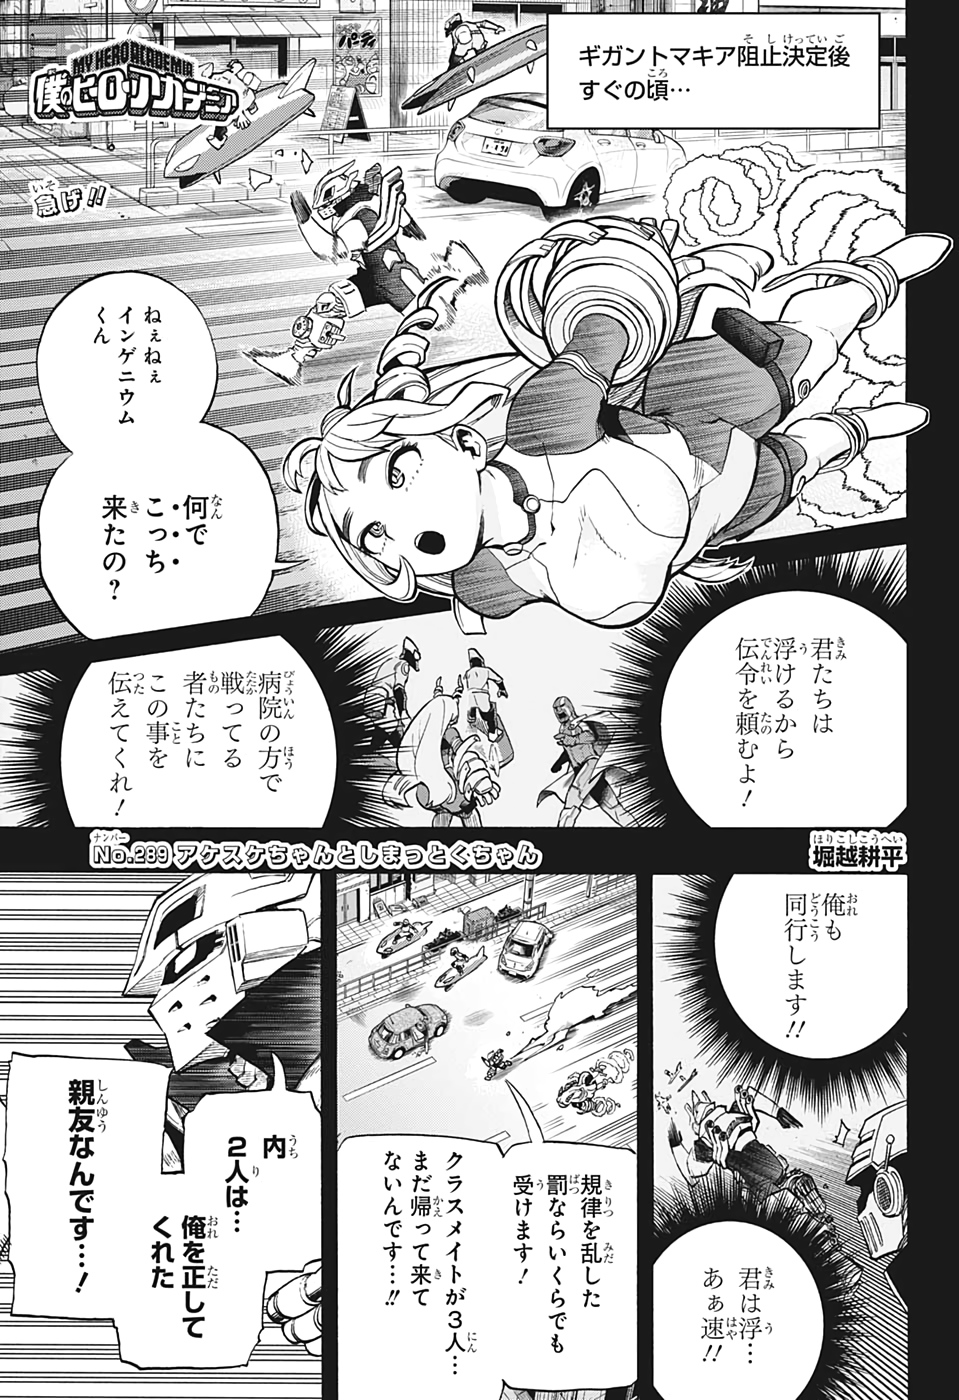 Boku no Hero Academia - Chapter 289 - Page 1